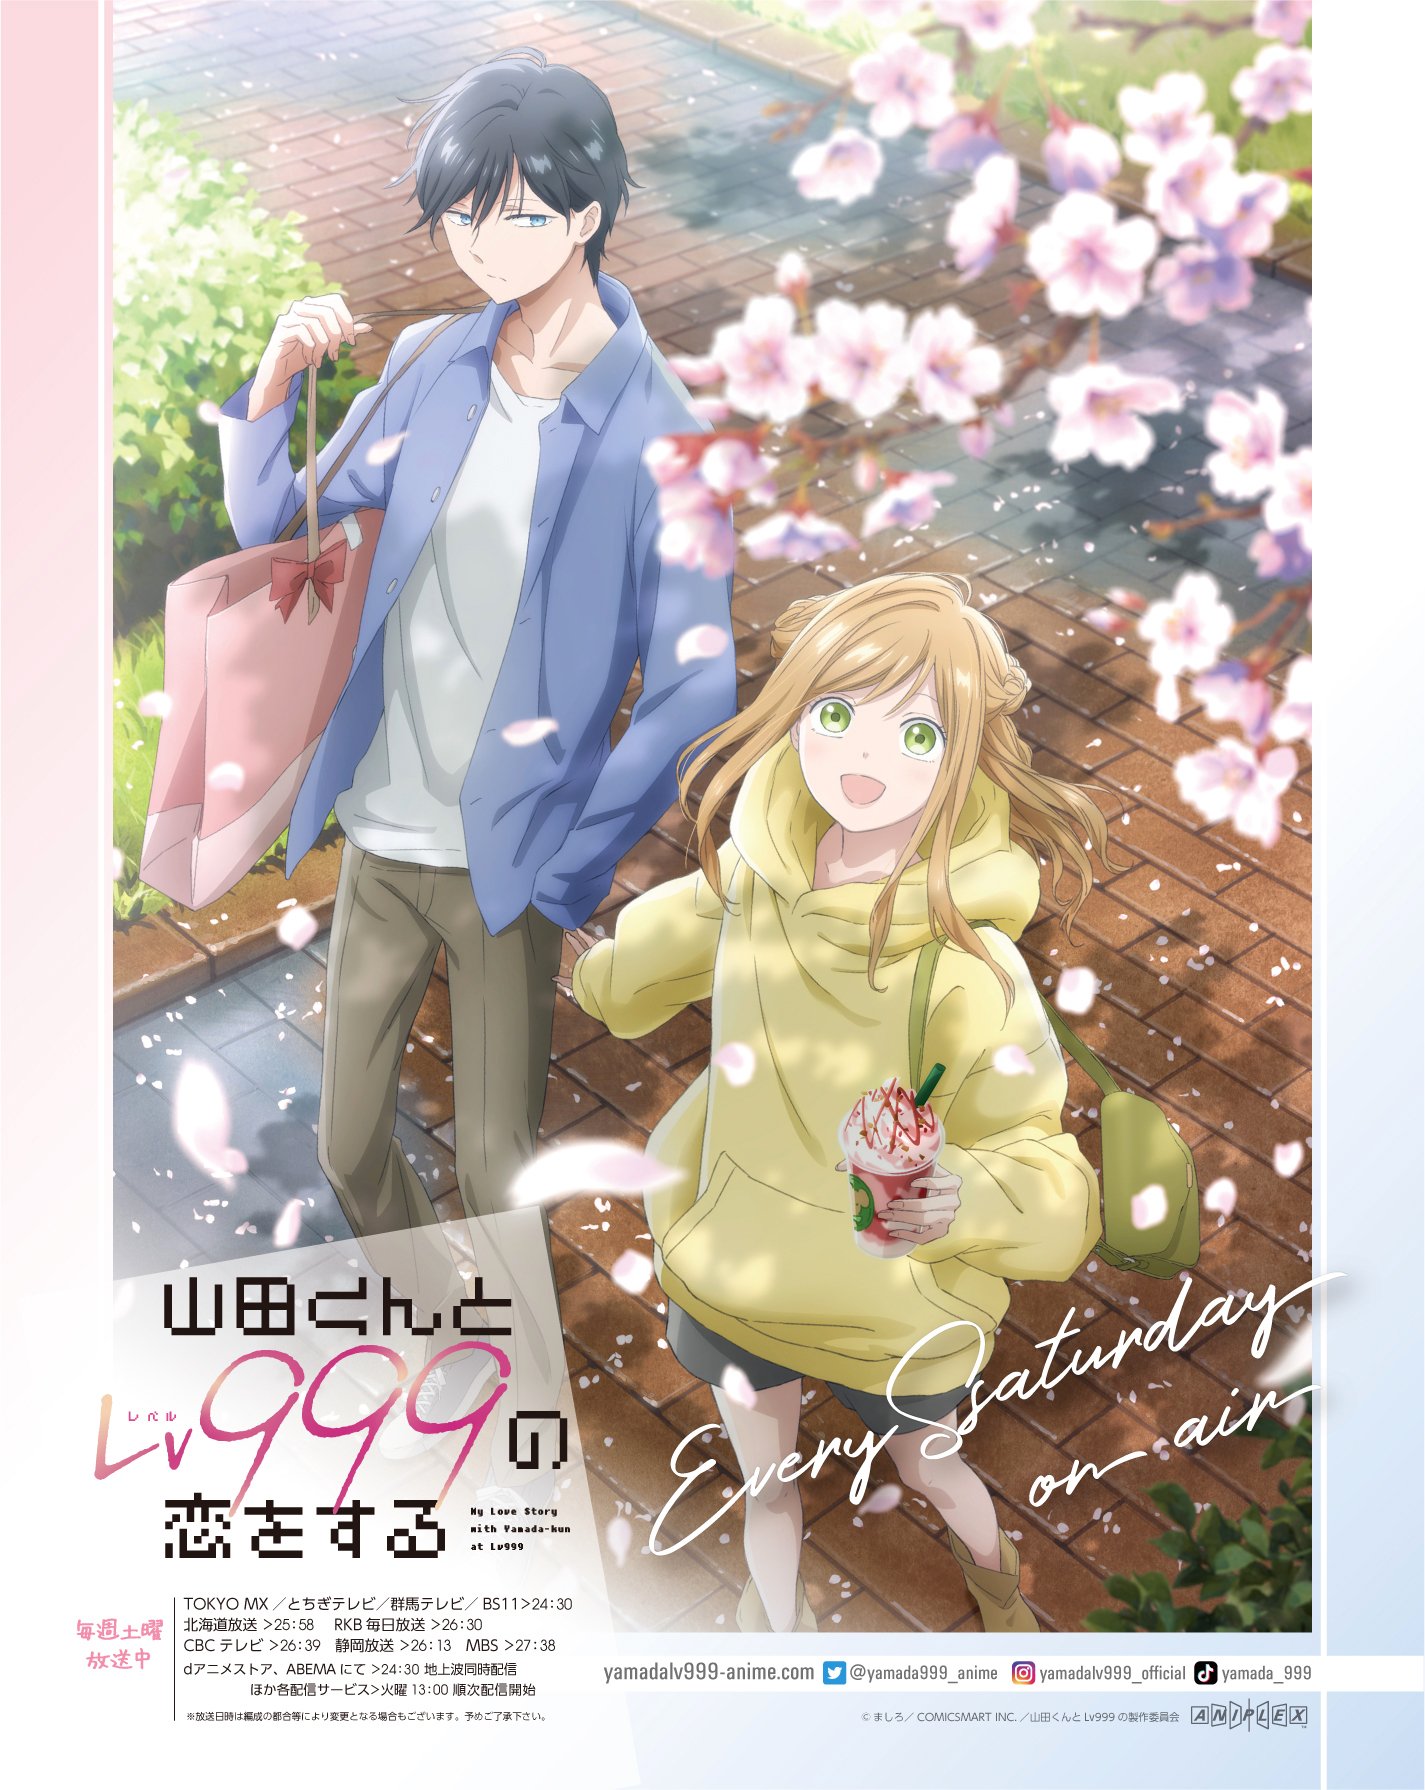 my love story with yamada lv 999 manga